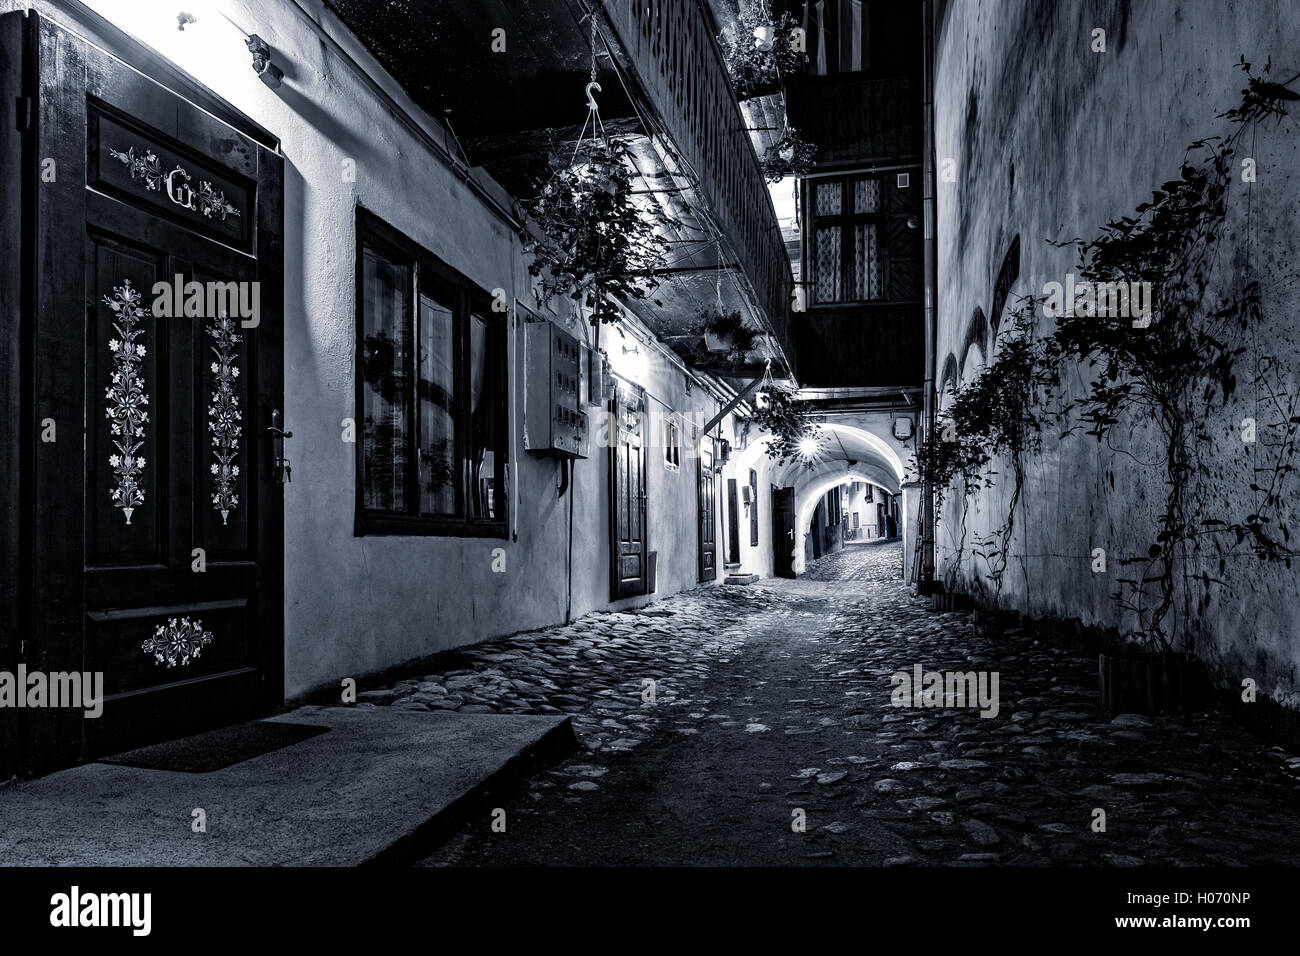 Moody monochrome view of a cobblestone street passage in the old city center of Sibiu, Romania Stock Photo